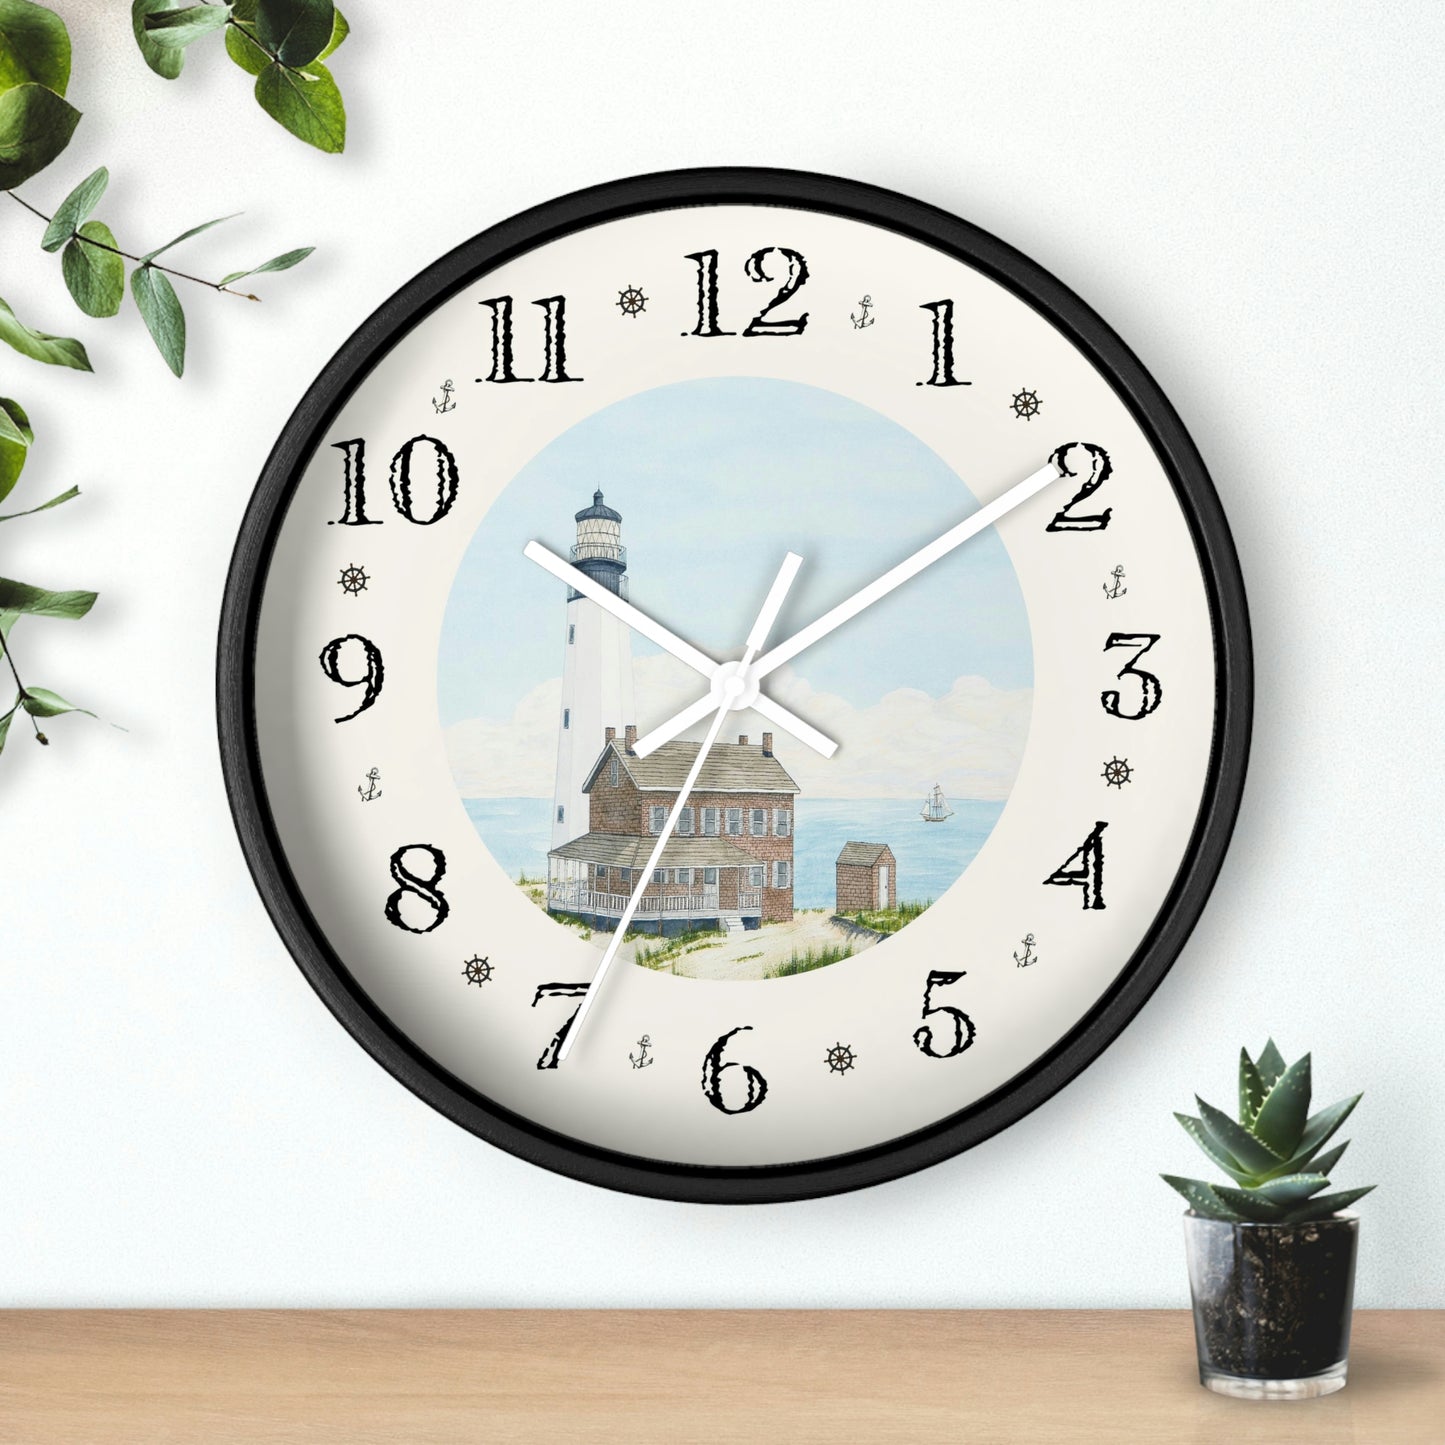 Spirit of Cape Henlopen Heirloom Designer Clock